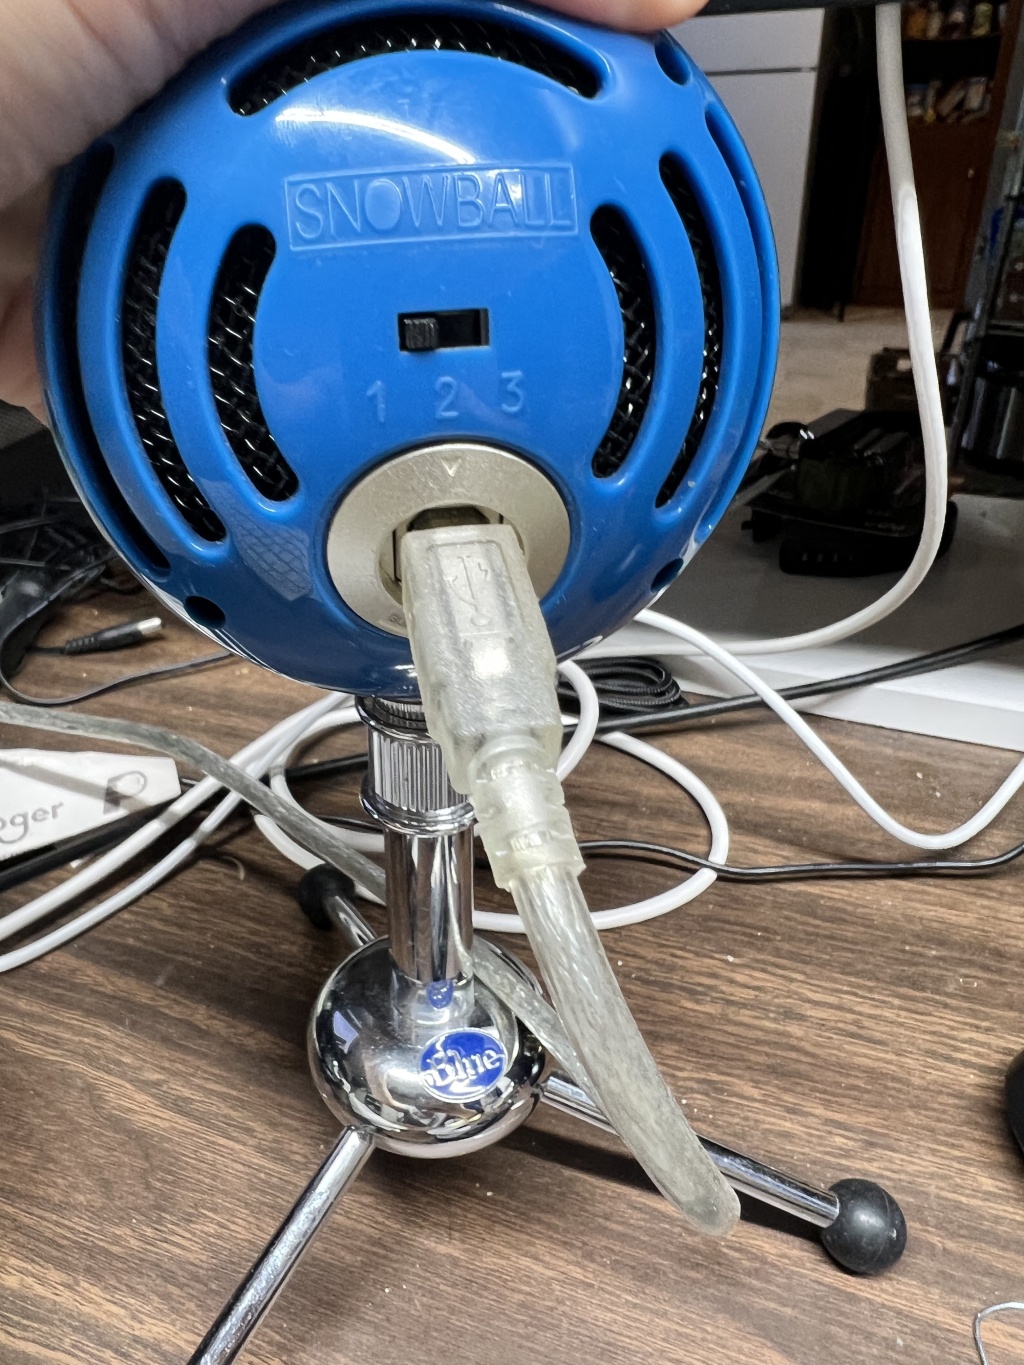 The Yeti Snowball Microphone